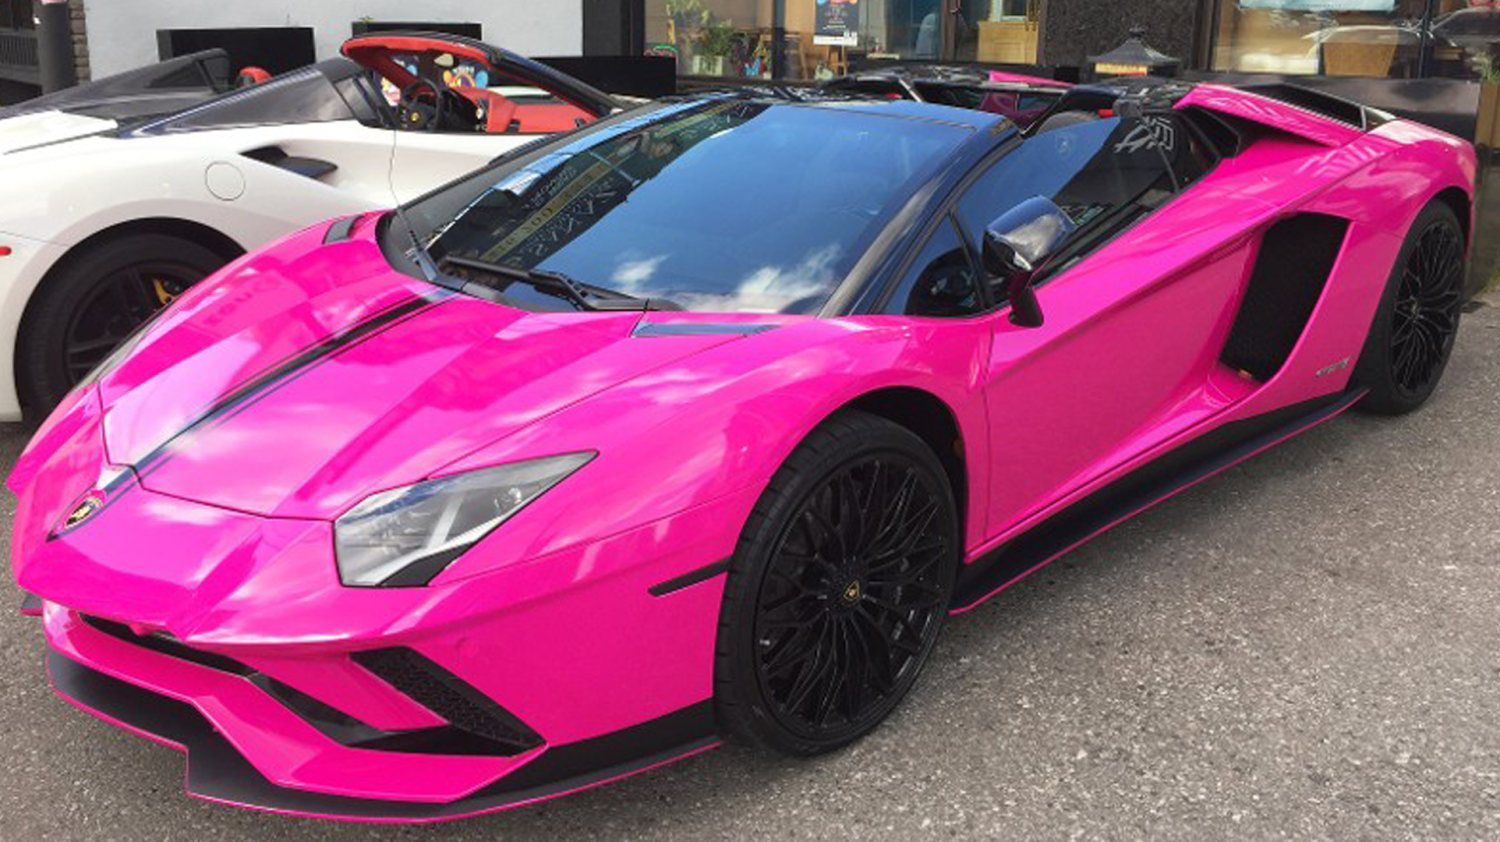 Ex novia de Nicky Jam vende Lamborghini rosado que él le regaló